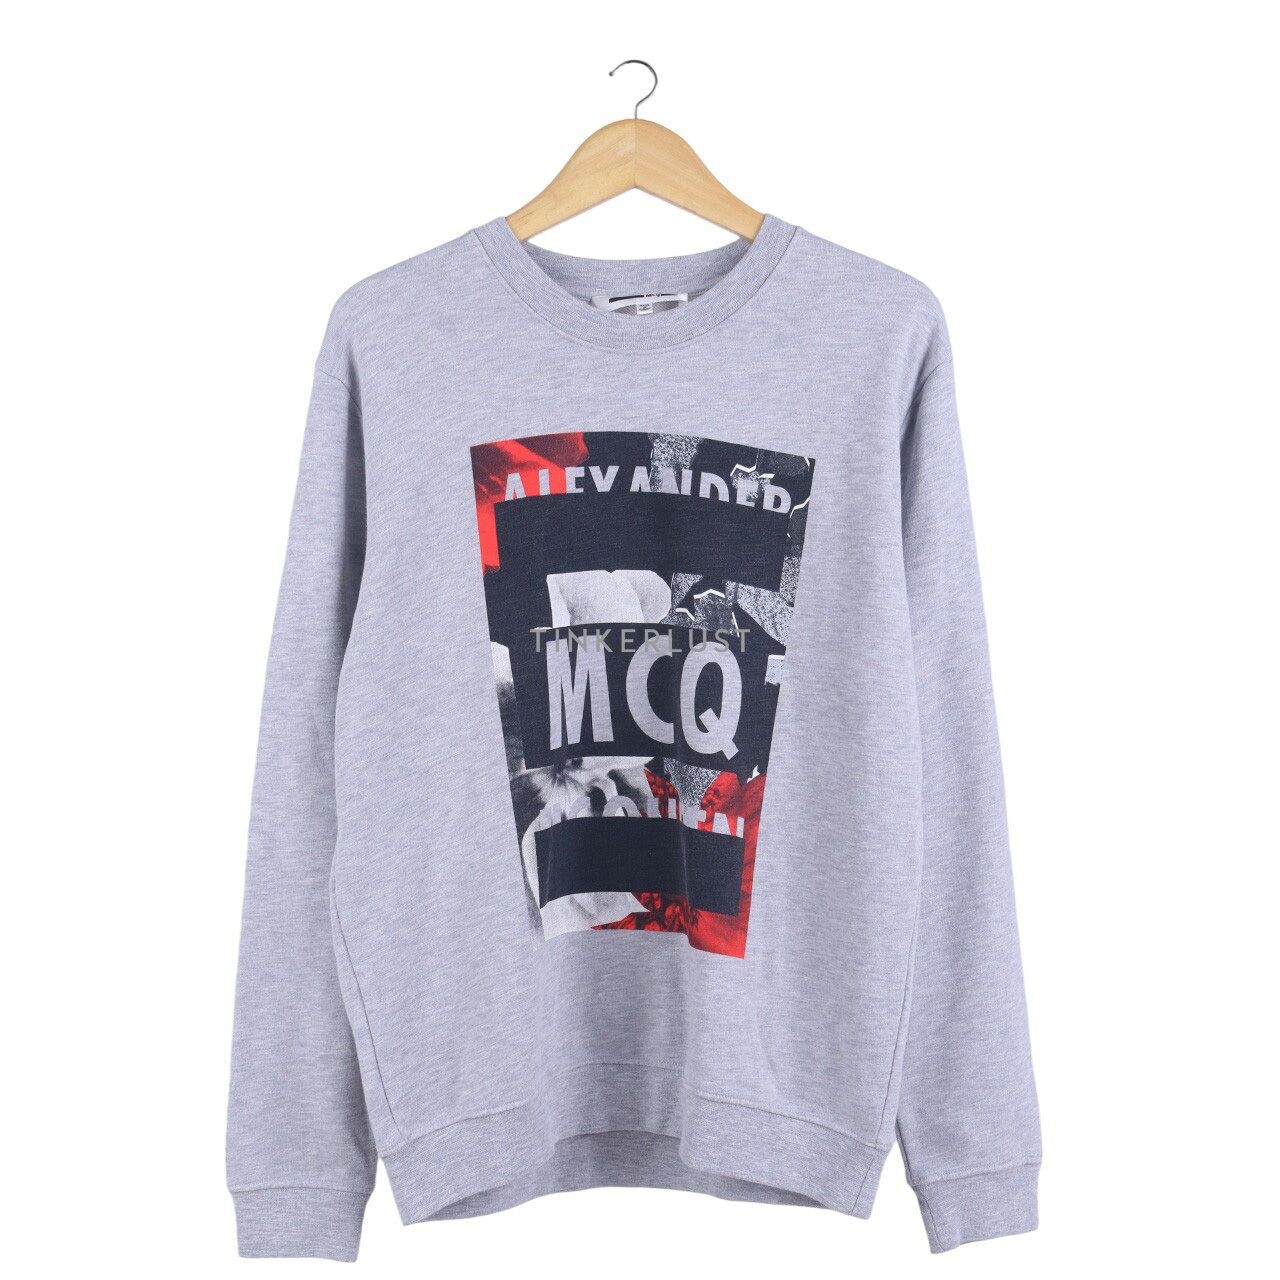 McQ Alexander McQueen Grey Sweater